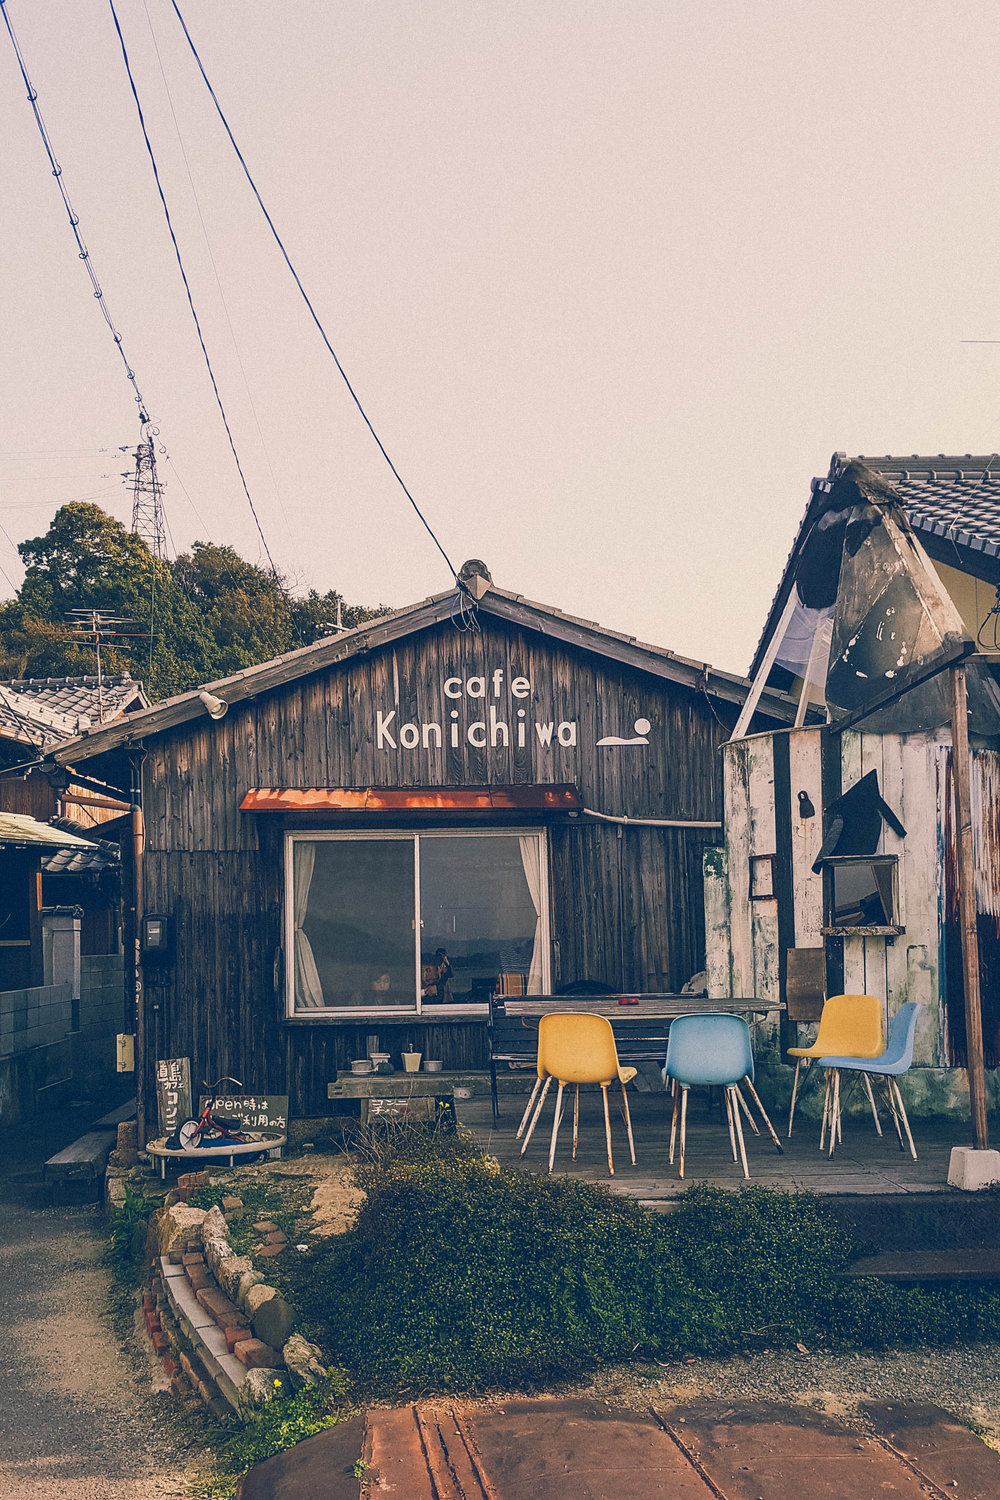 Cafe Konichiwa, Honmura port